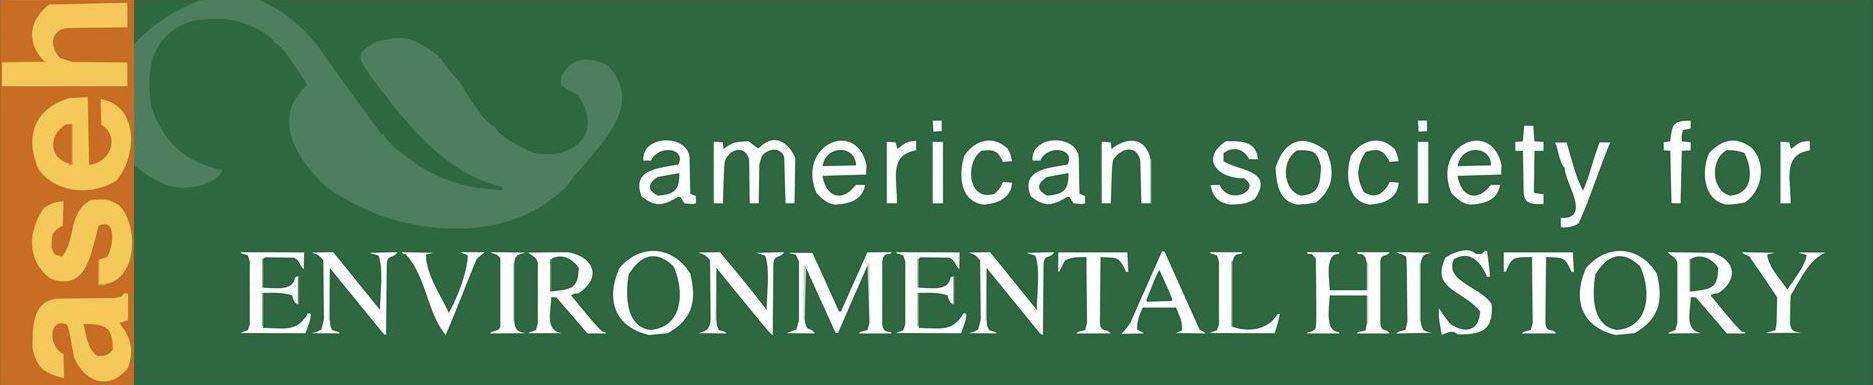 American society of magical. Американское общество по качеству (American Society for quality, ASQ).. American Society for quality. Environmental History.